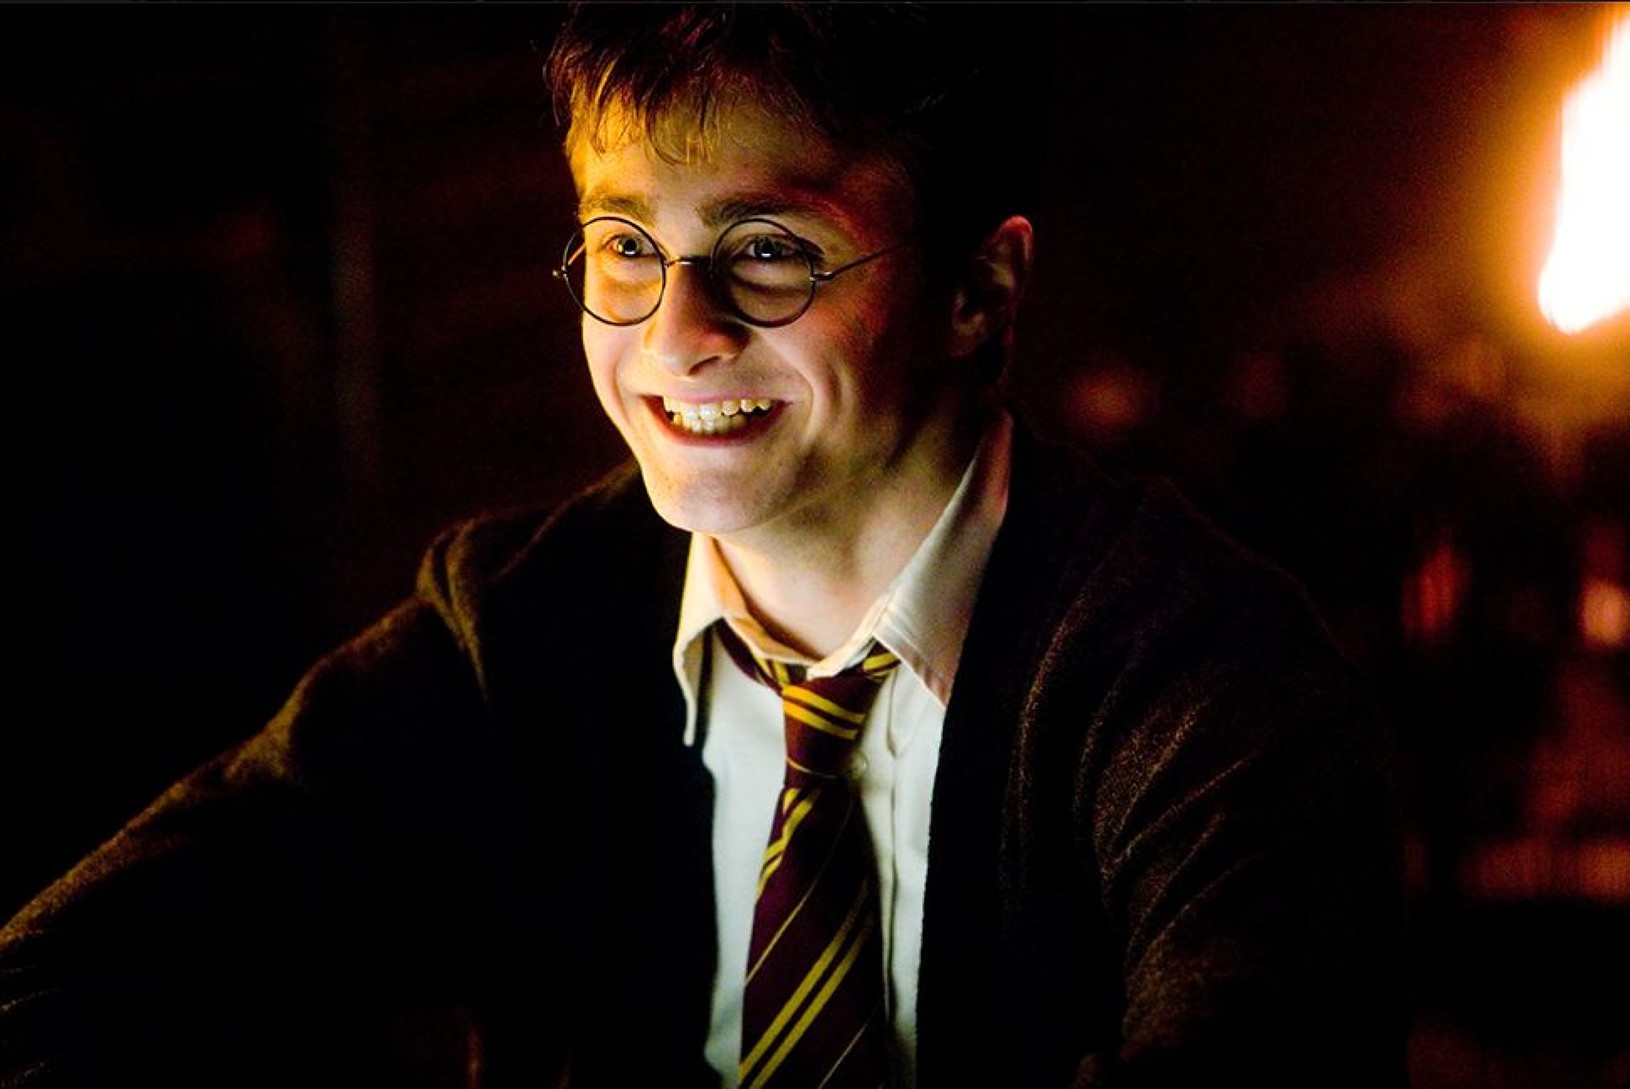 Daniel Radcliffe ako Harry